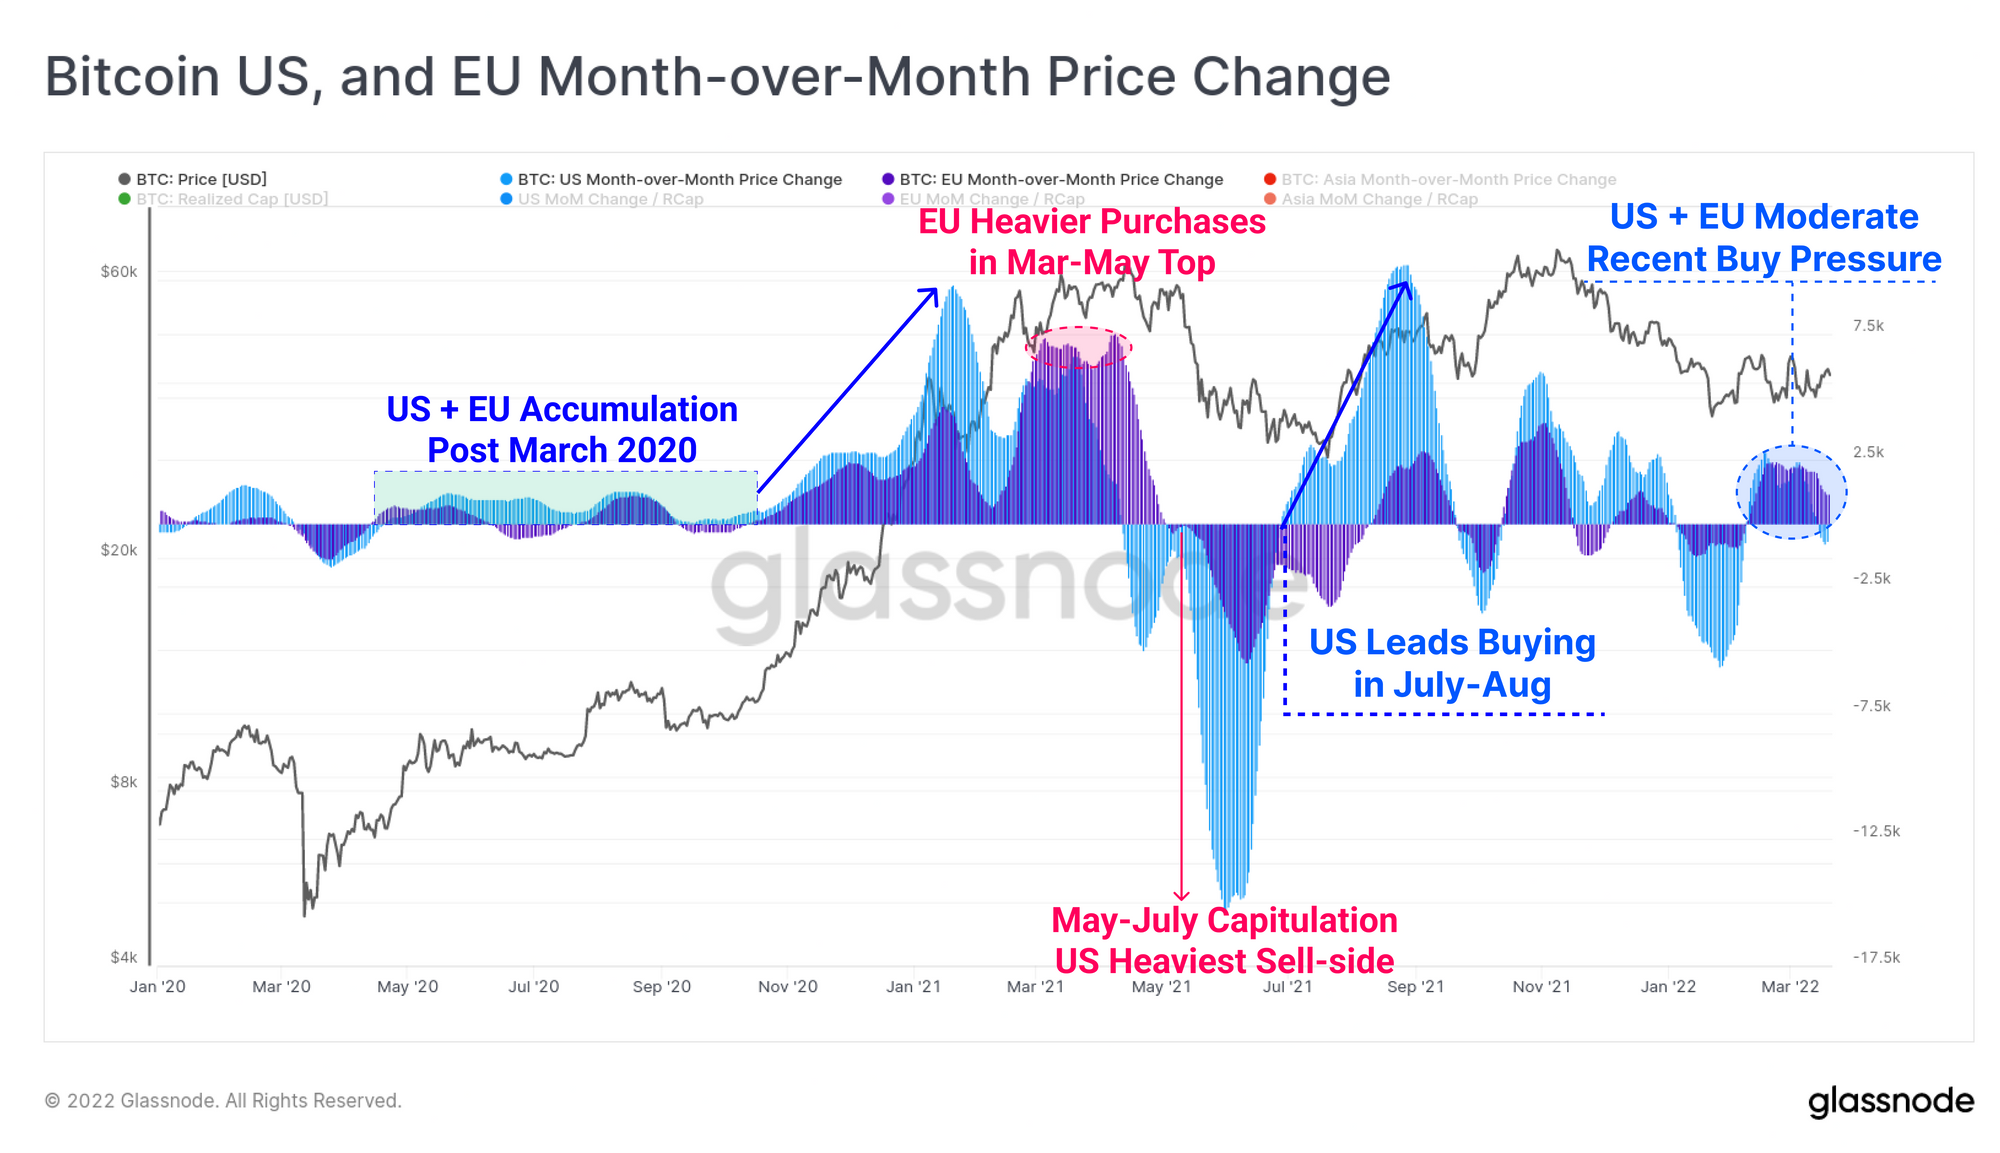 Bitcoin US and EU Price Change